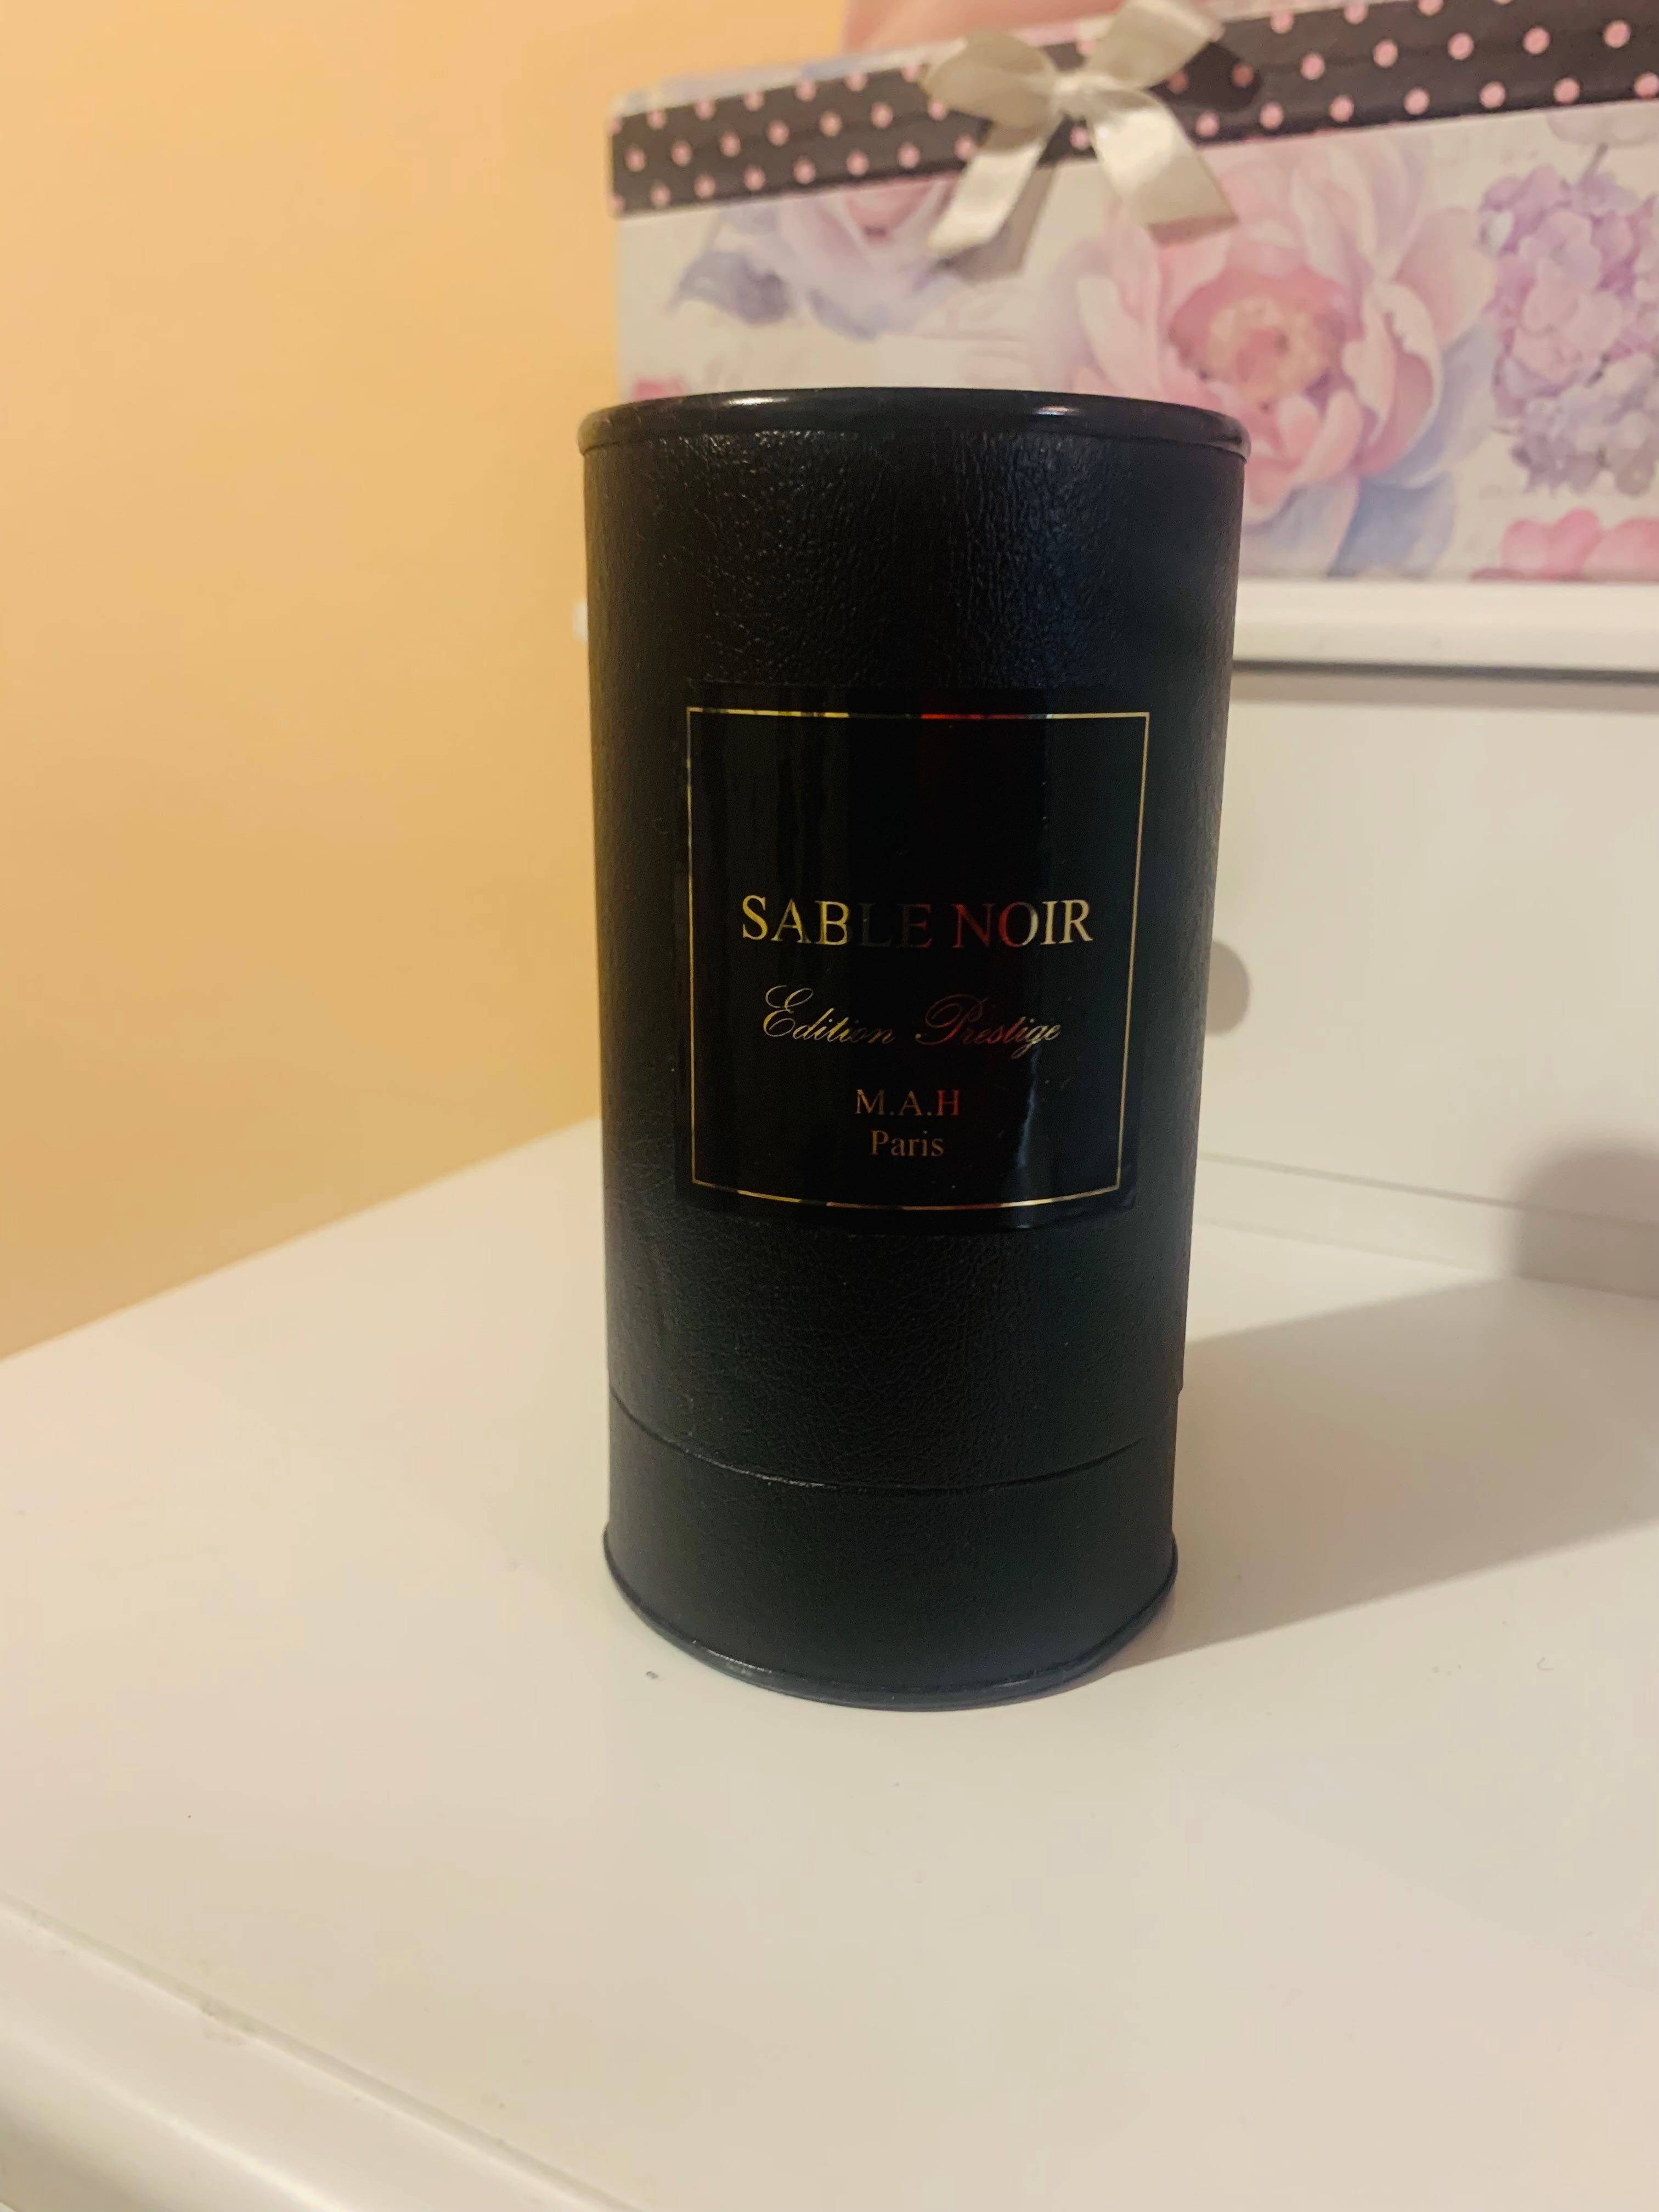 Парфюм-Sable Noir Perfume extract (extrait de parfum) M.A.H parfums